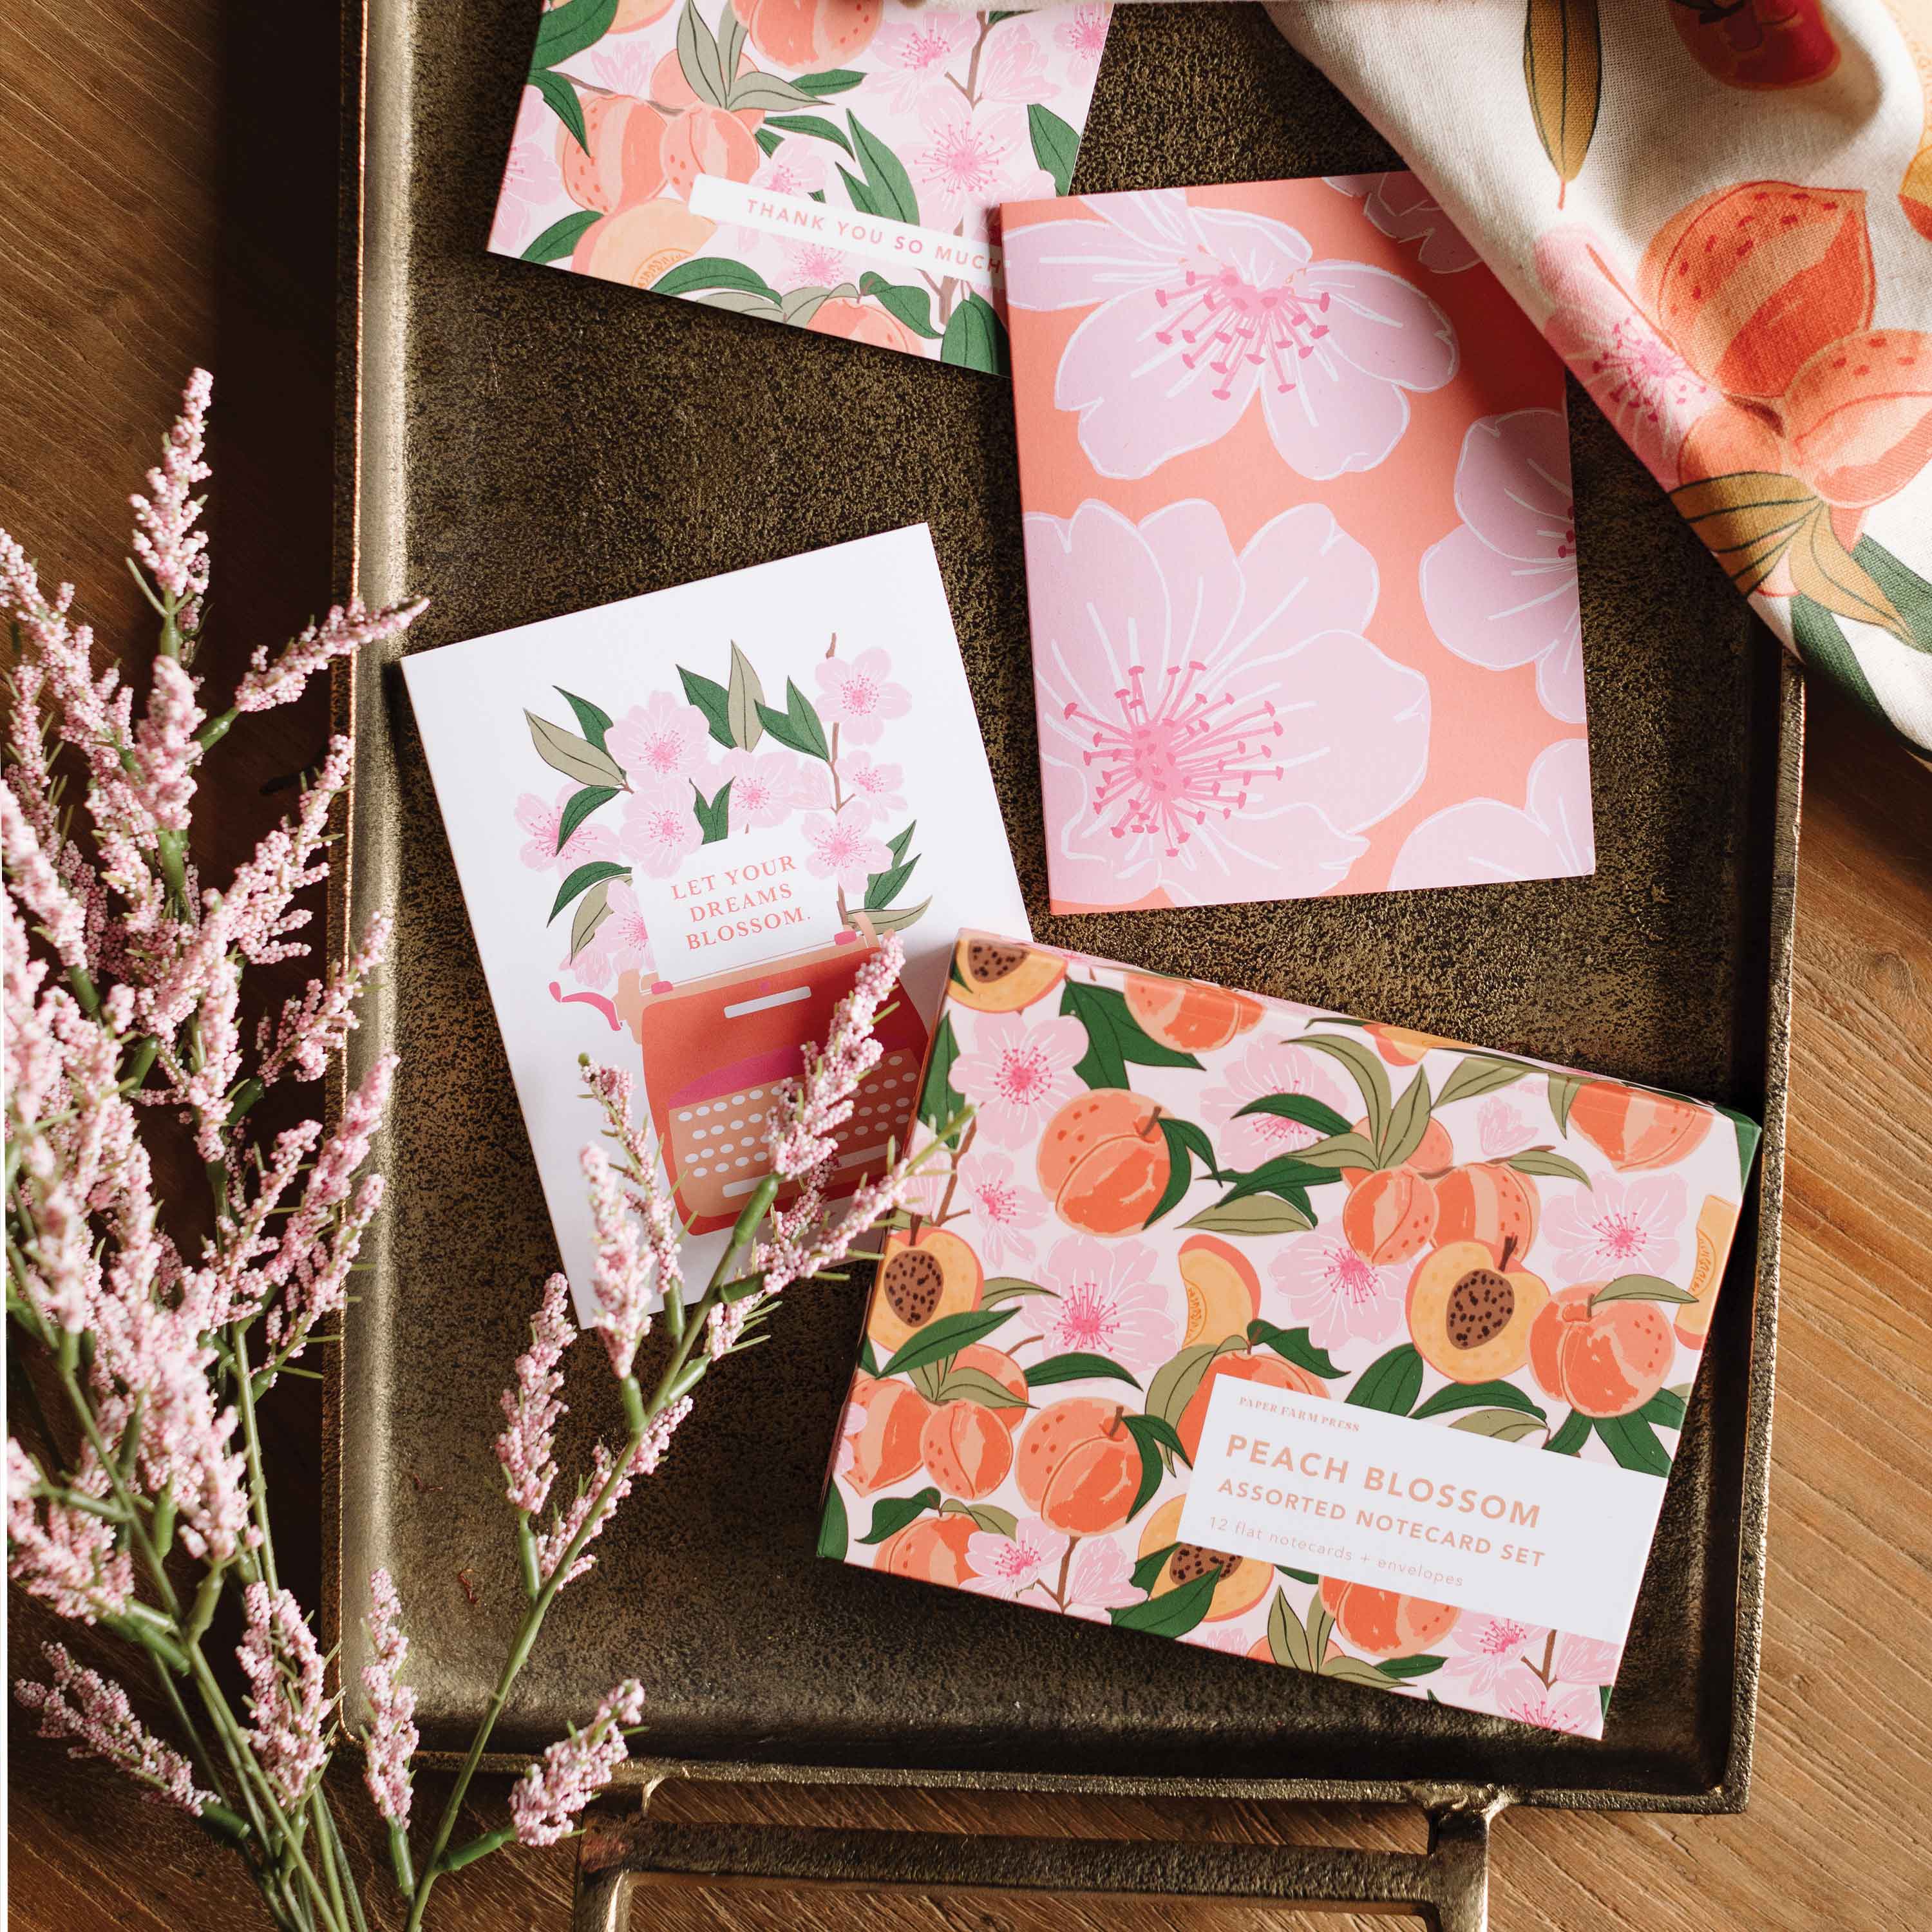 Peach Blossom Assorted Notecard Set, Pen Pal Greeting Cards